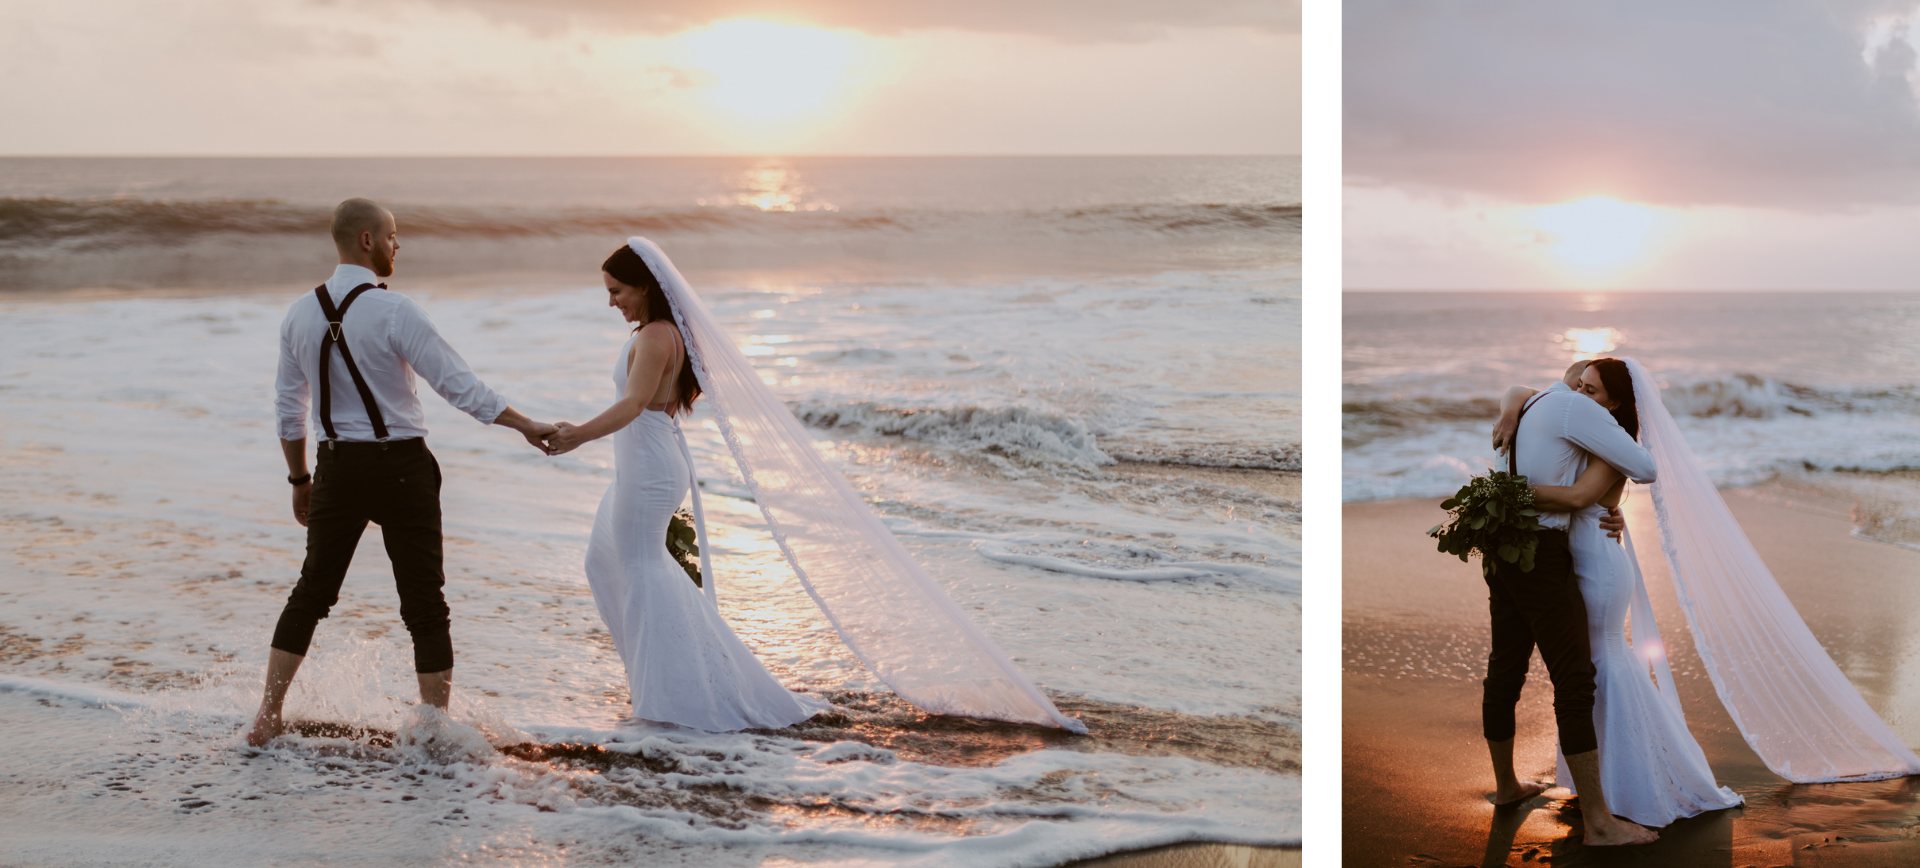 bali beach wedding - sunset photoshoot of bride & groom during their elopement